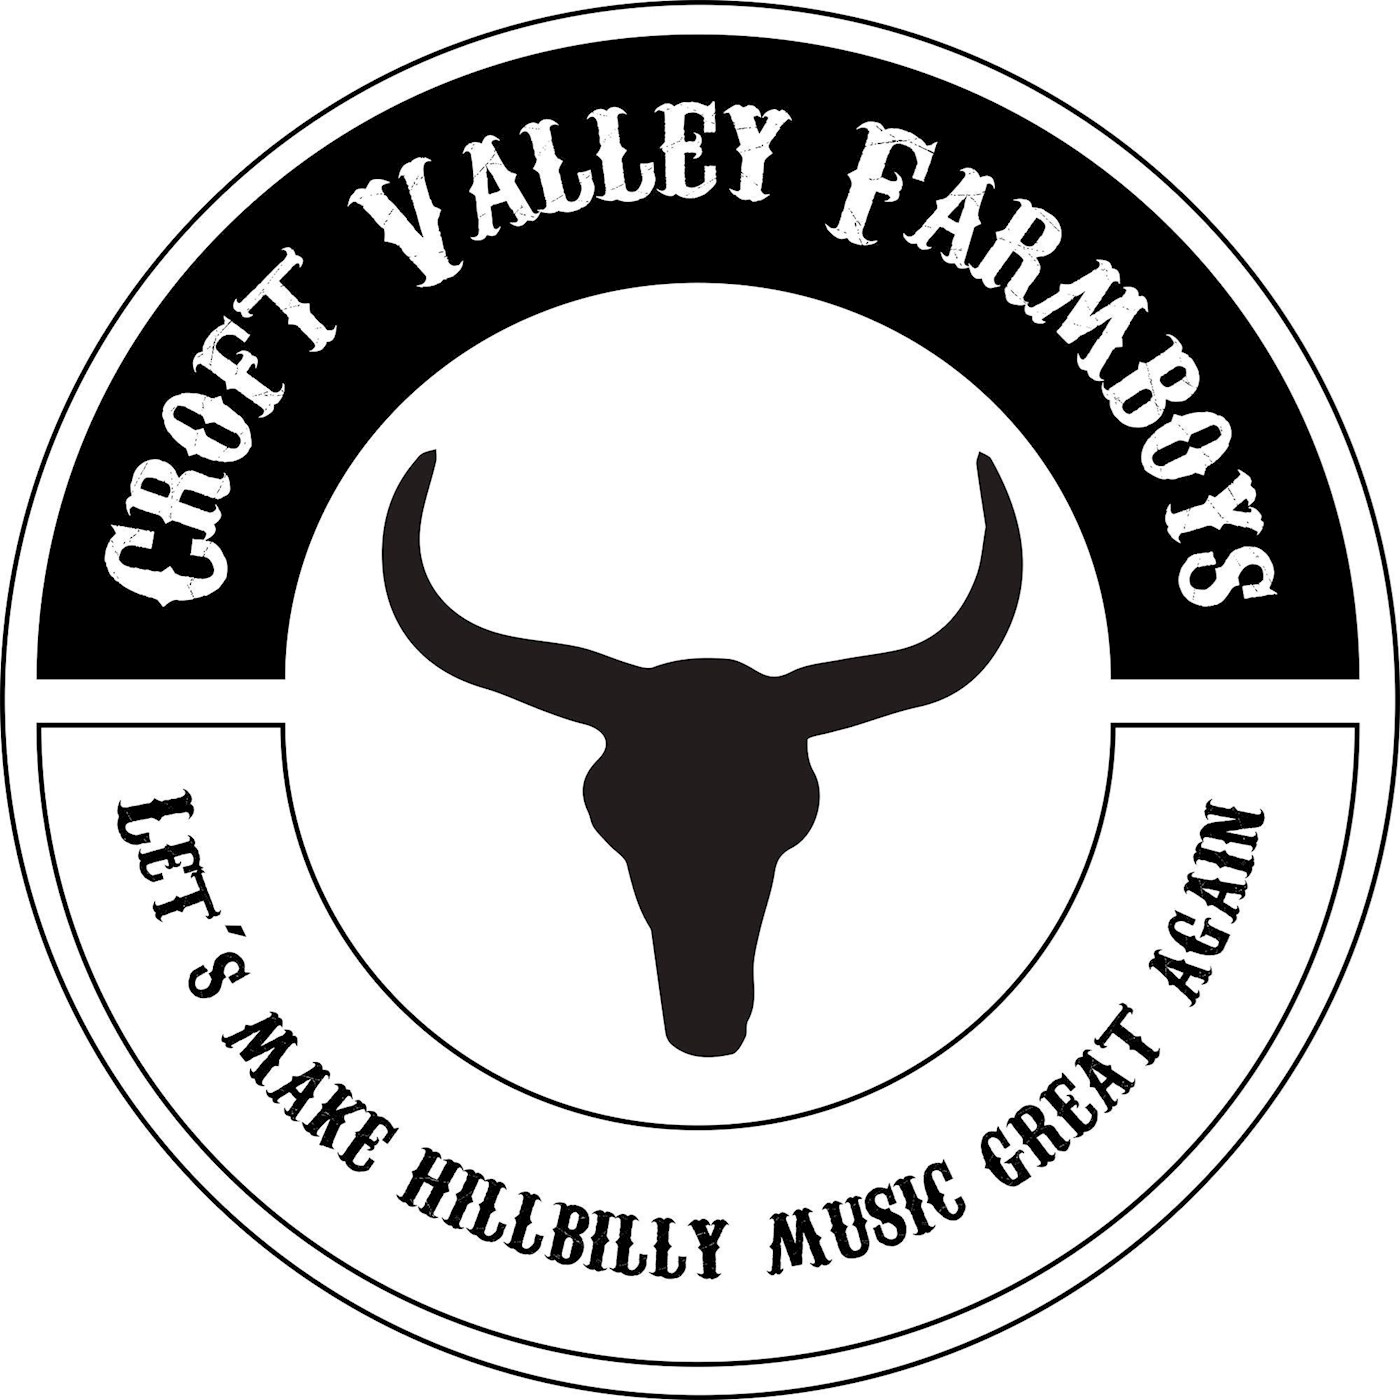 Let's make hillbilly music great again! Vol. 1